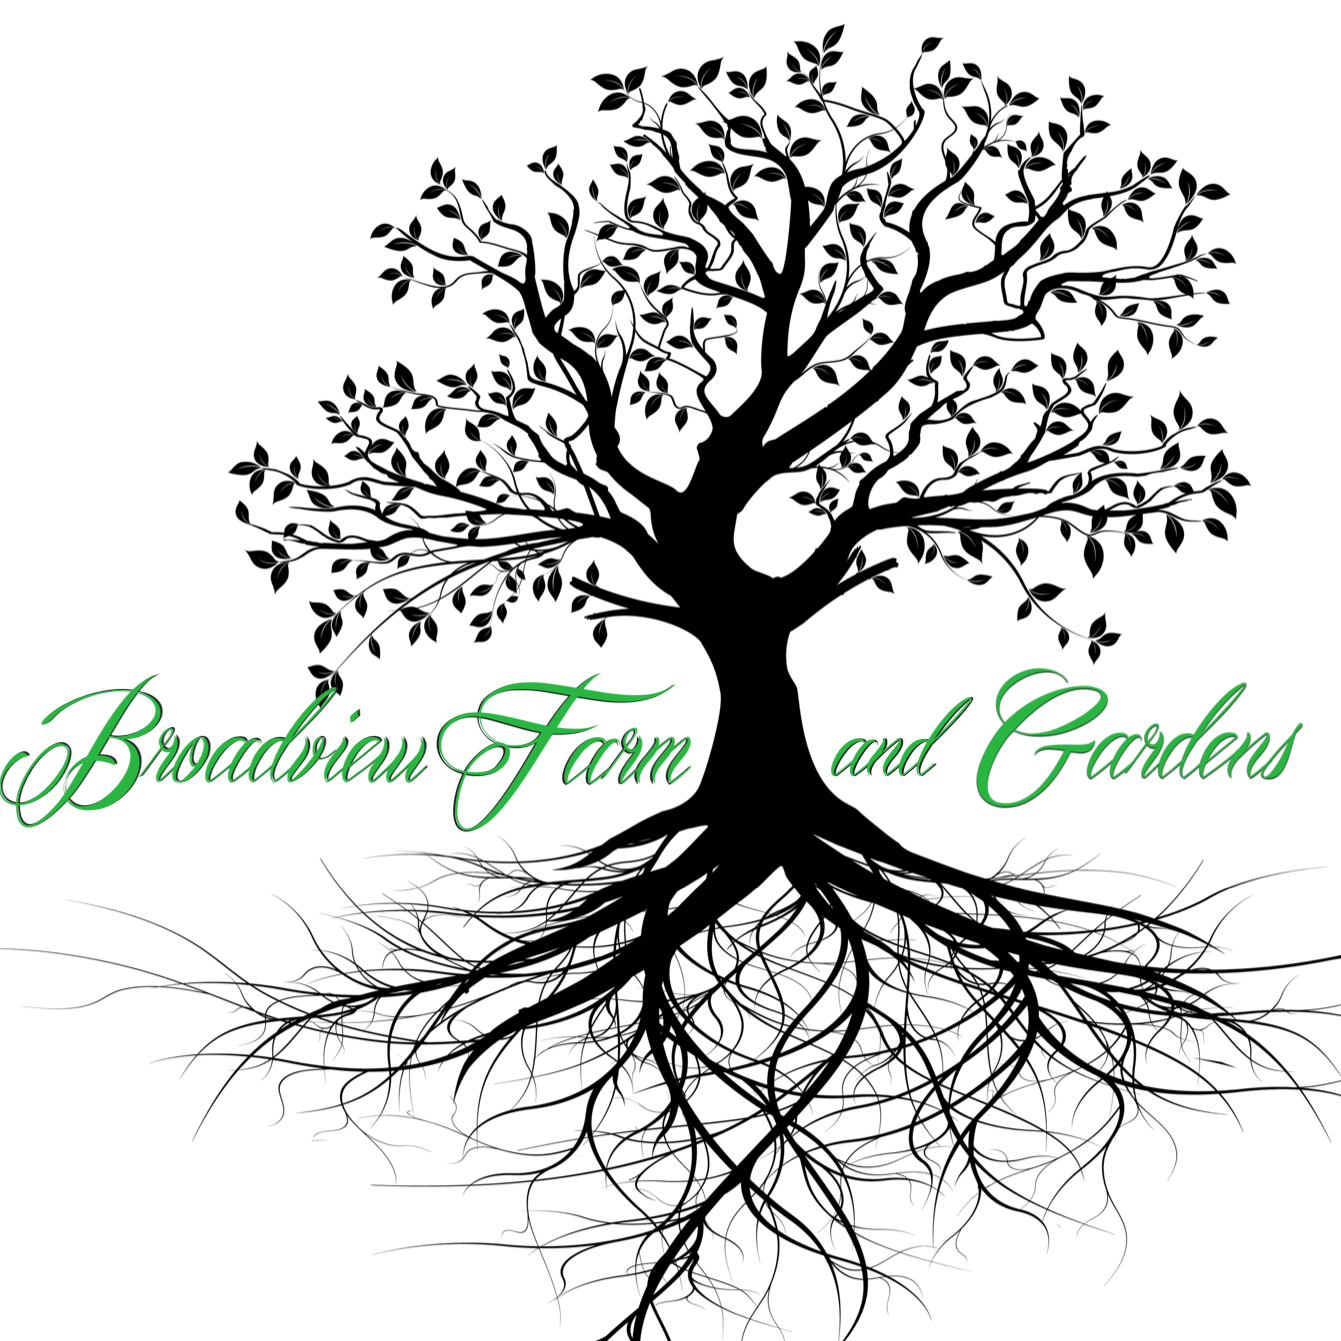 Broadview Farm and Gardens